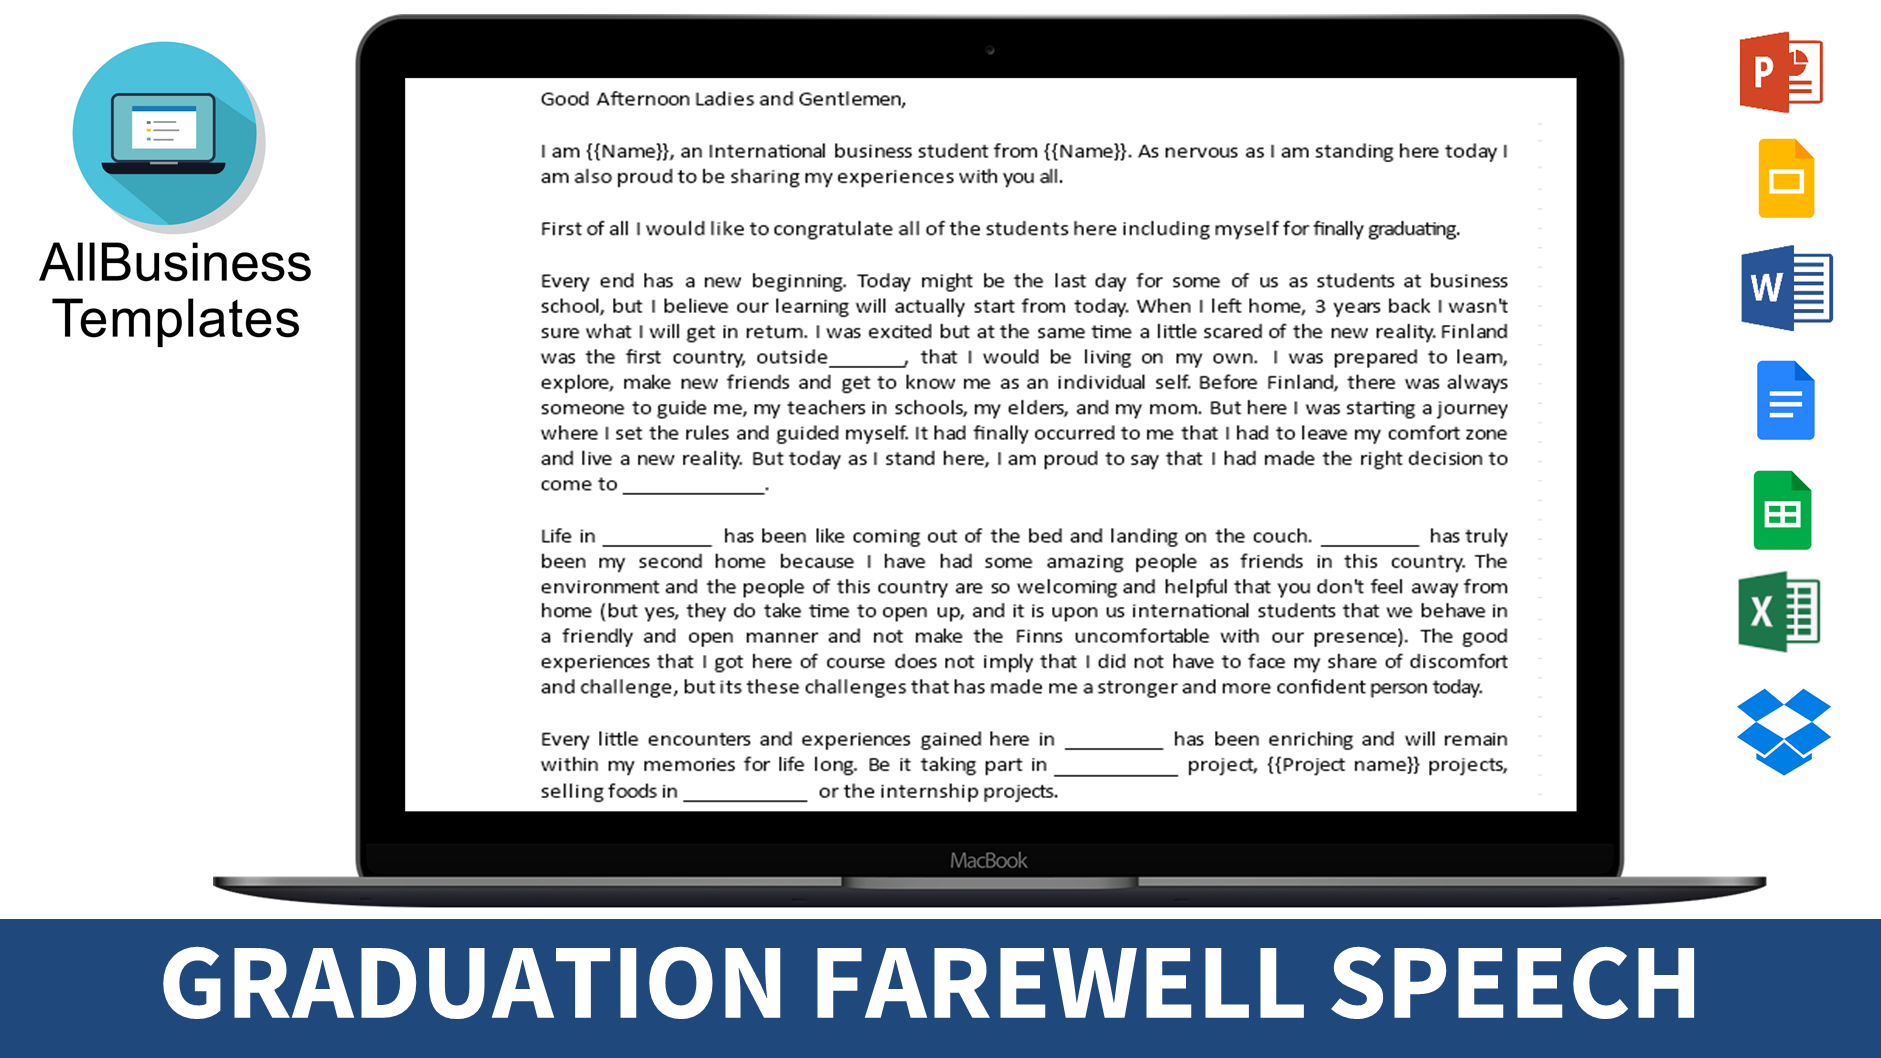 Graduation Farewell Speech main image